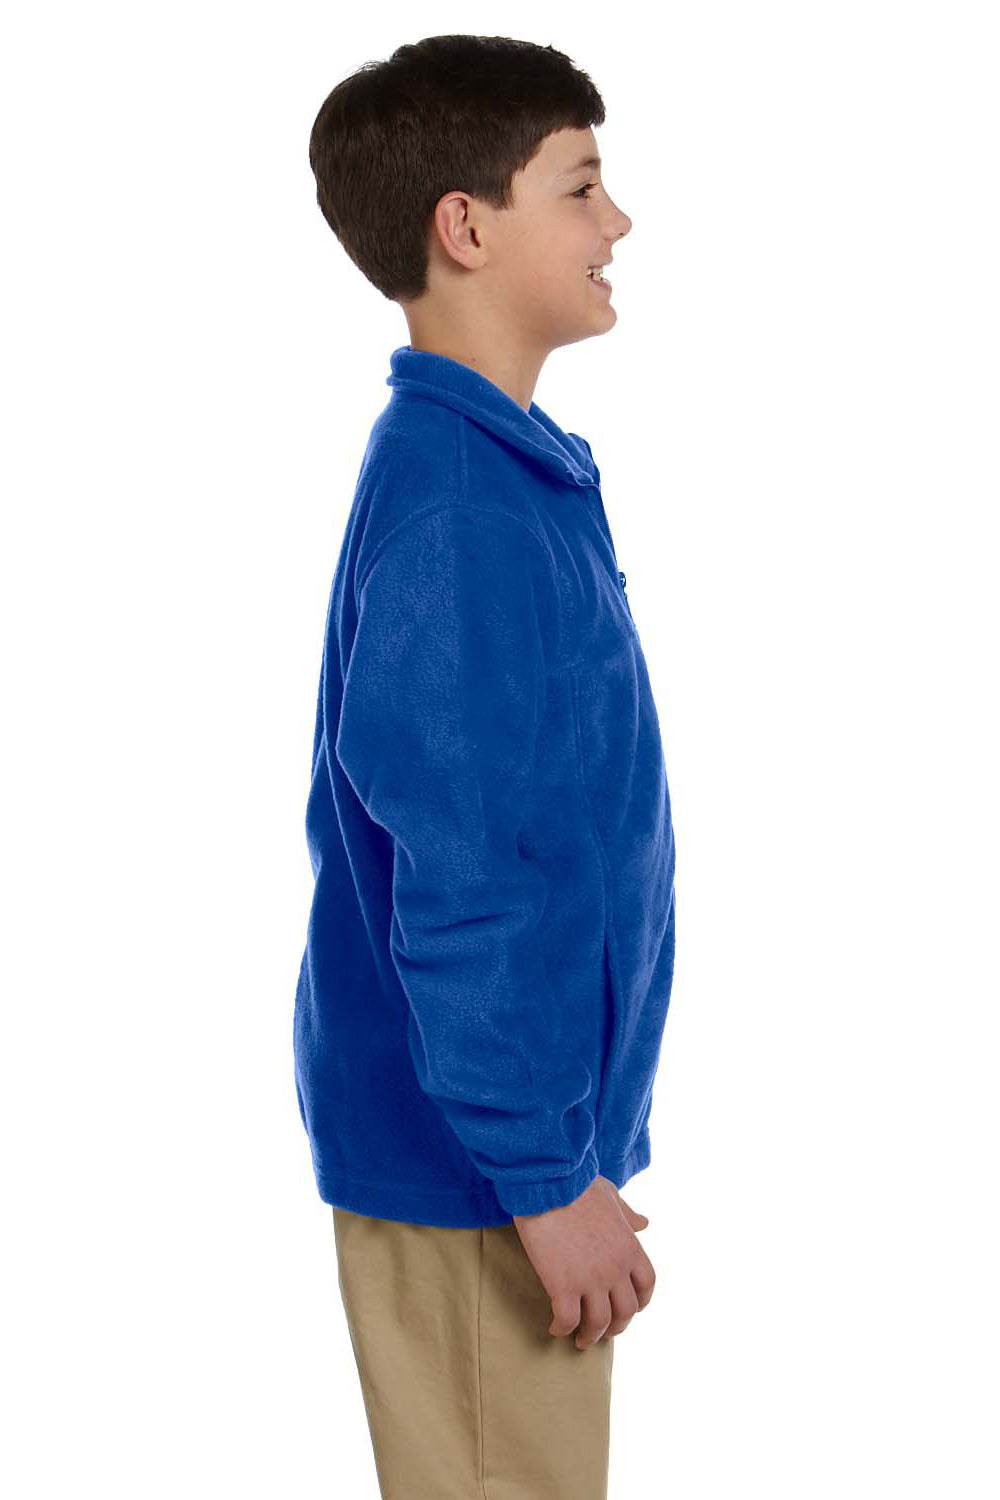 Harriton M990Y Youth Full Zip Fleece Jacket Royal Blue Side